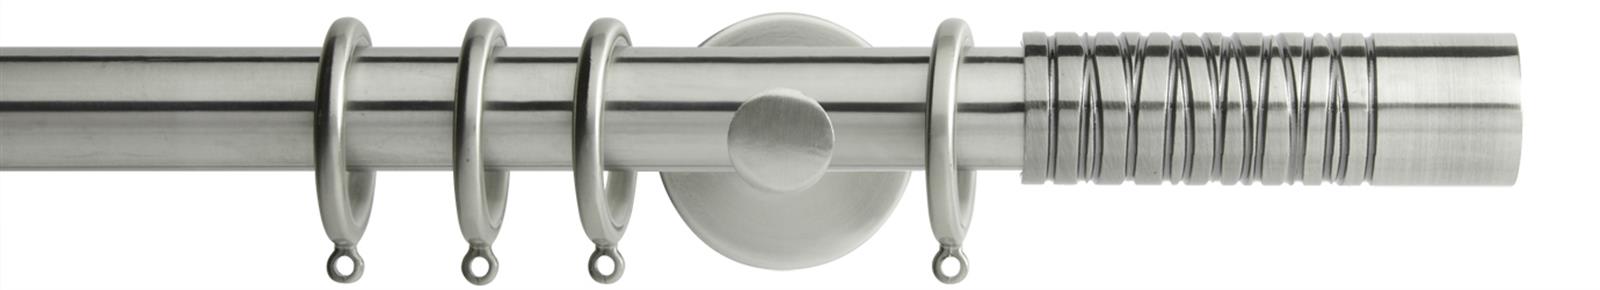 Neo Premium 28mm Pole Stainless Steel Cylinder Wired Barrel